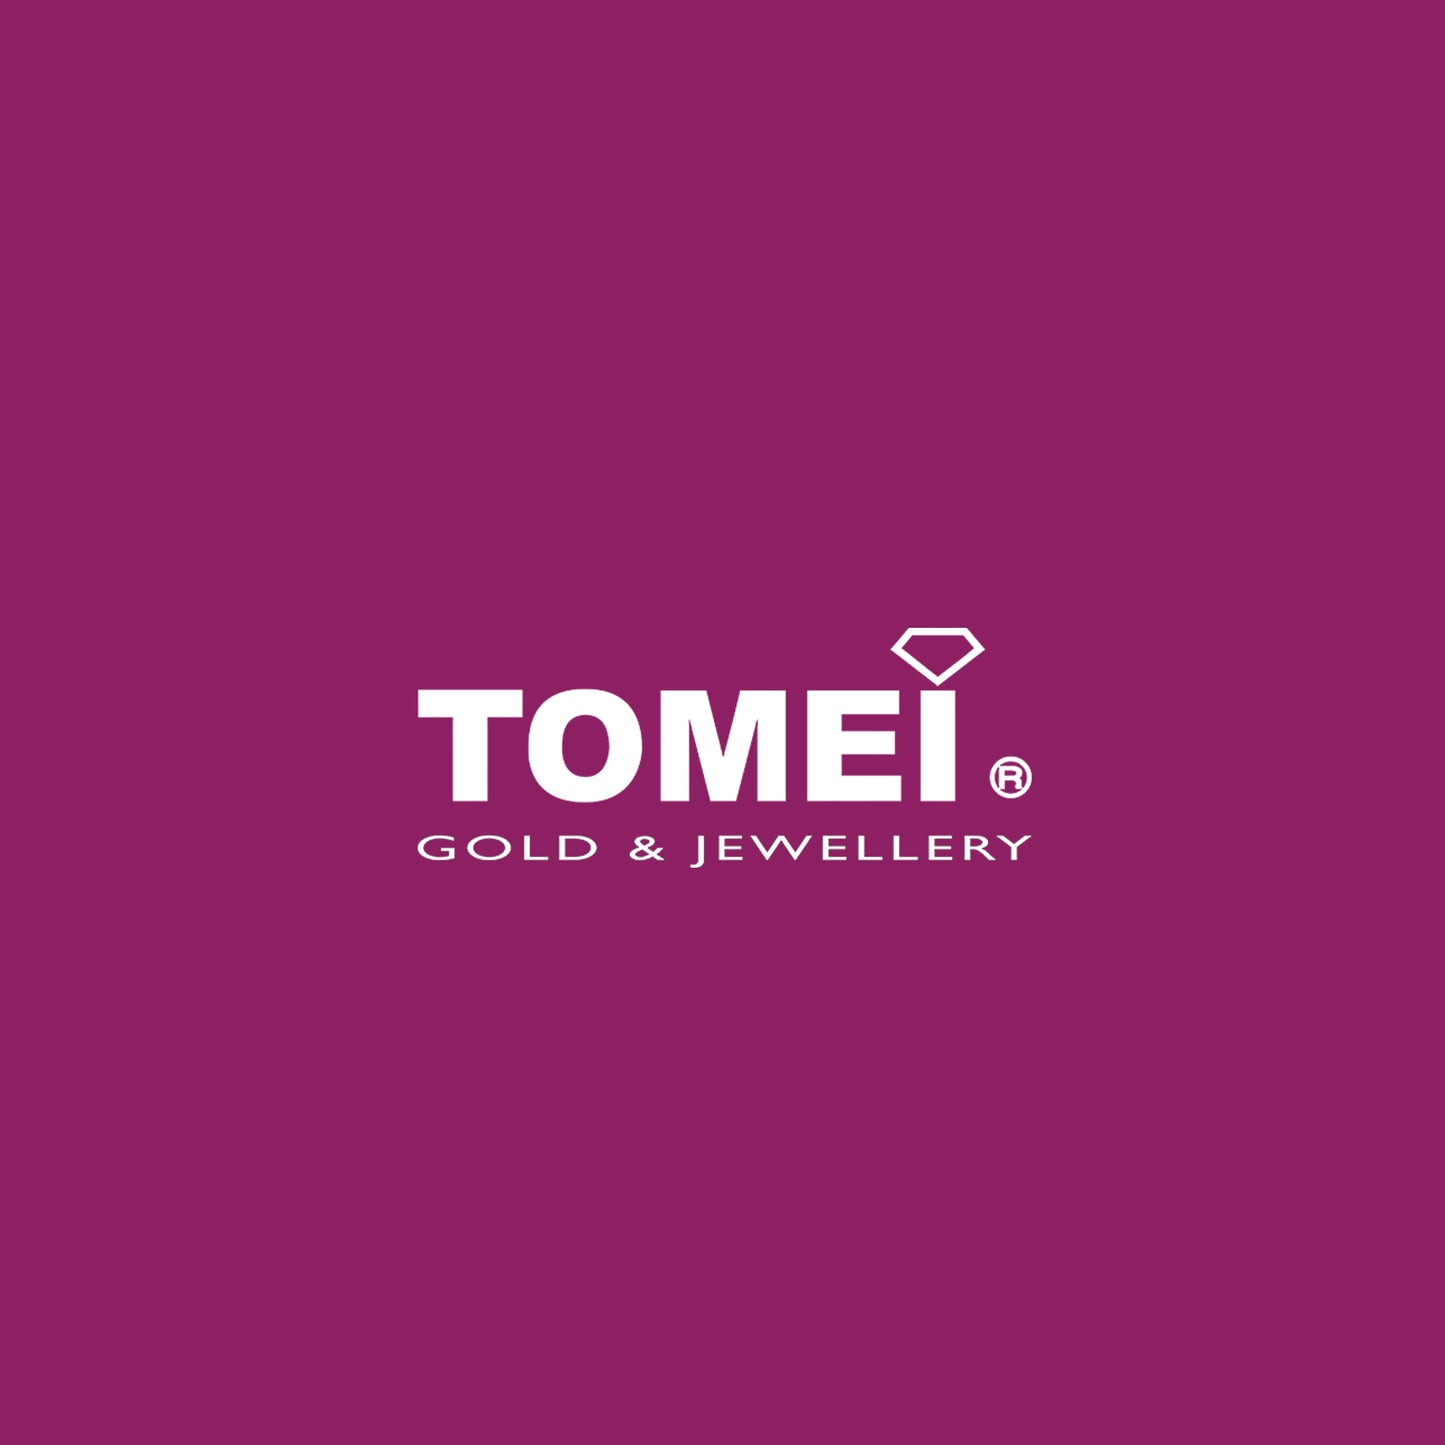 TOMEI Pendant, Diamond White Gold 750 (P4383)